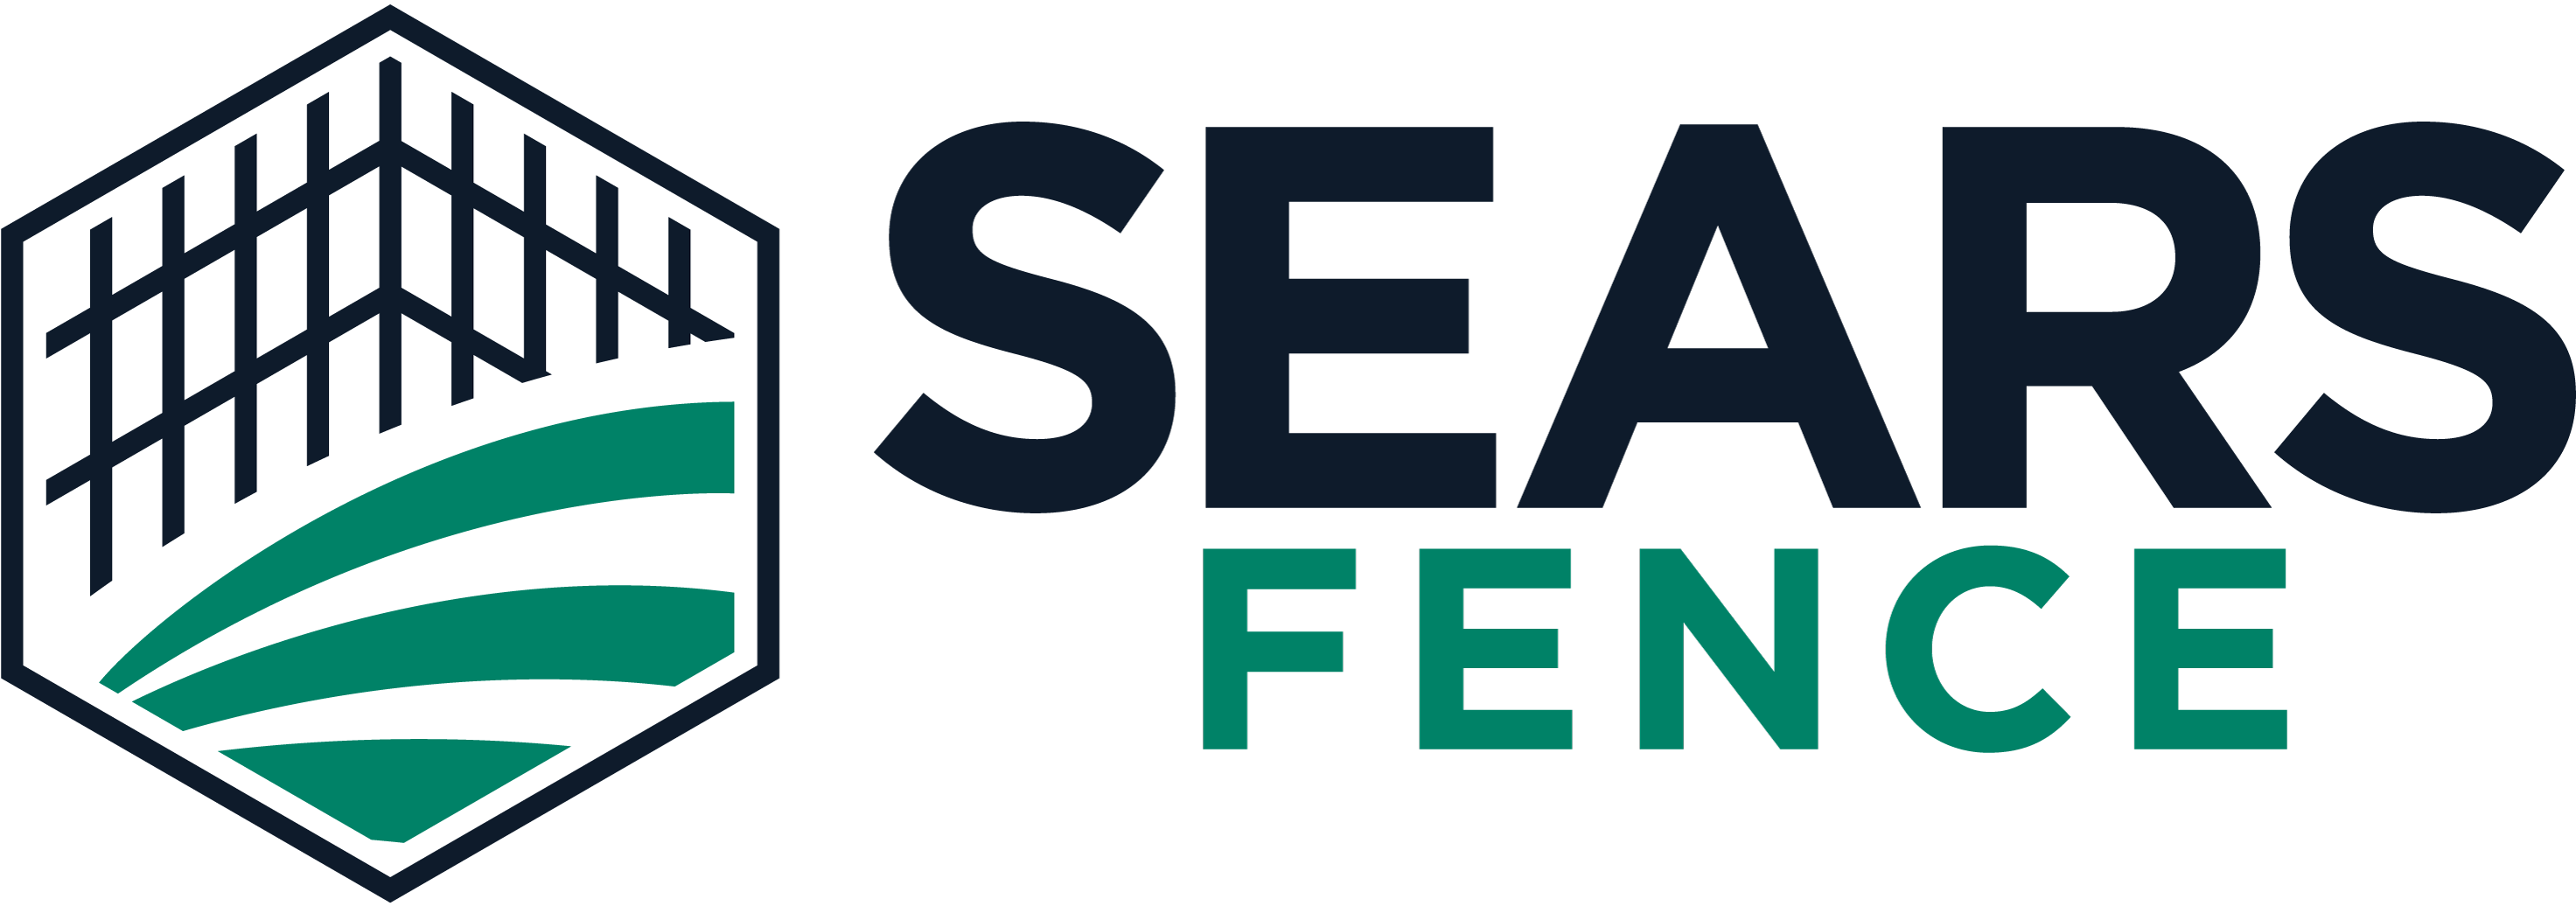 Sears Fence